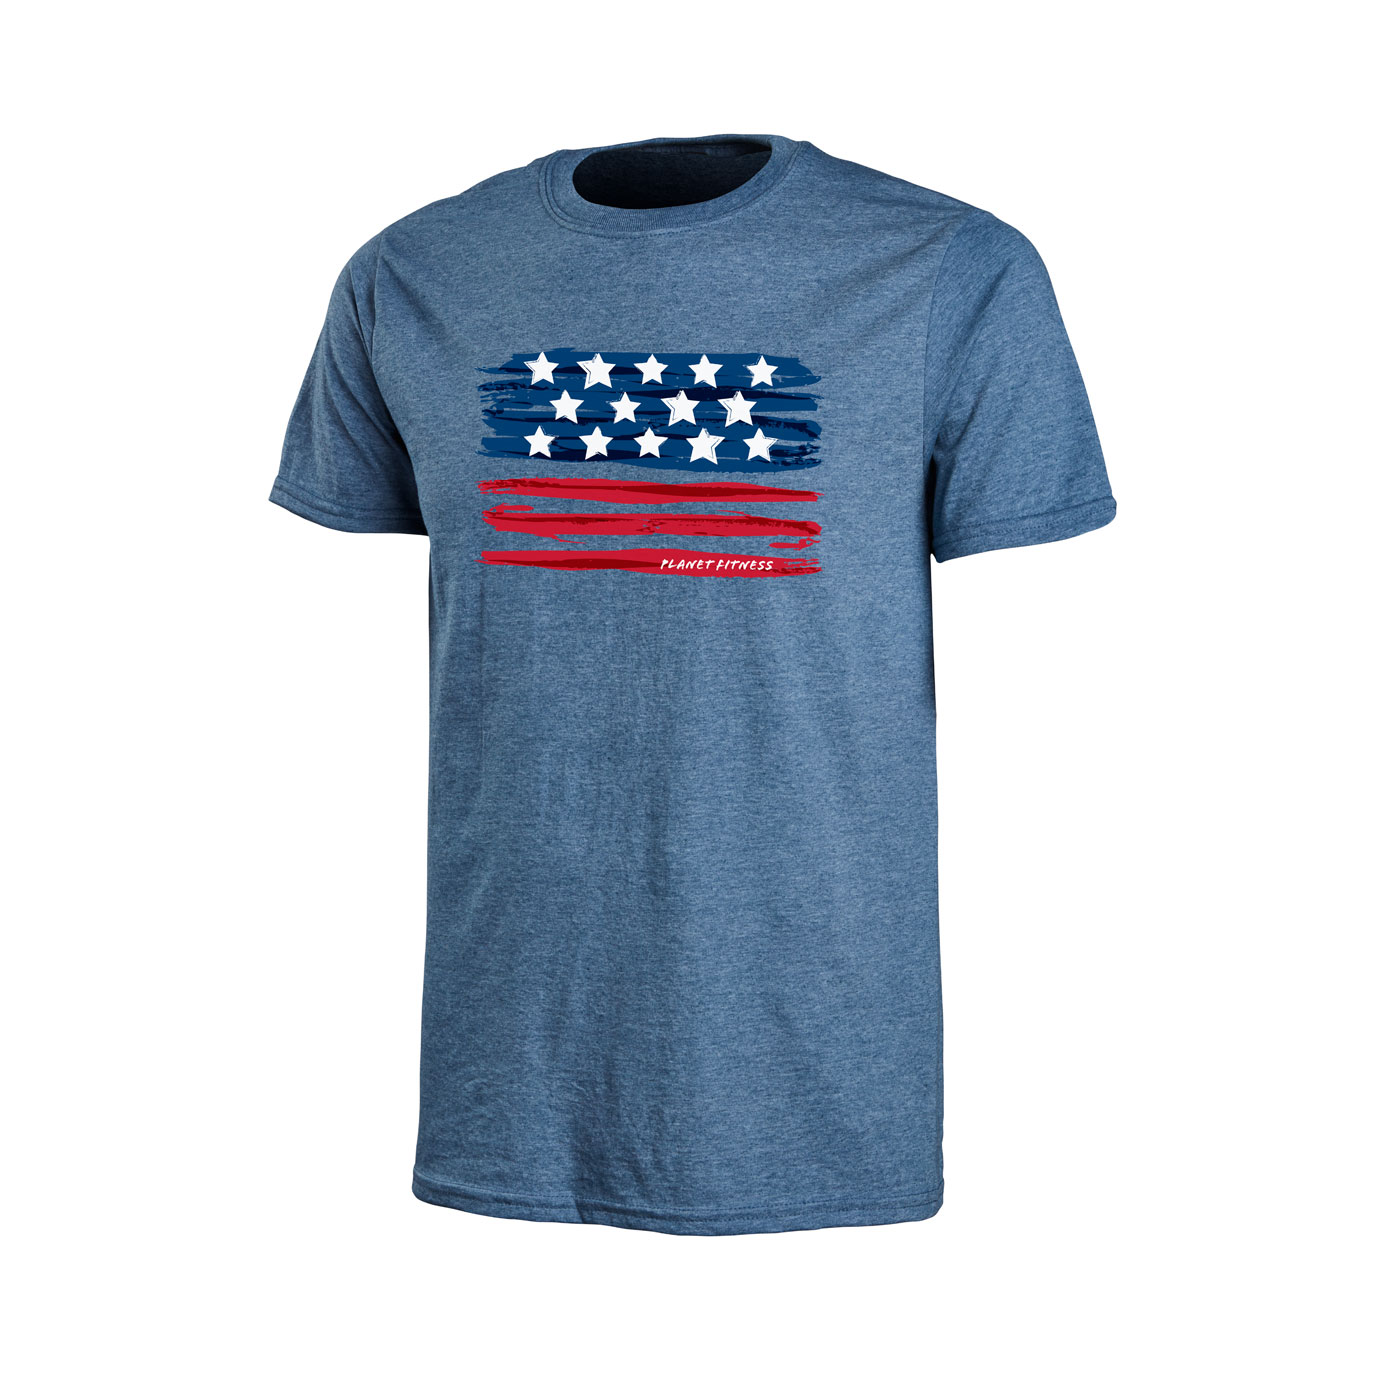 Unisex USA Flag T-shirt | Planet Fitness Store